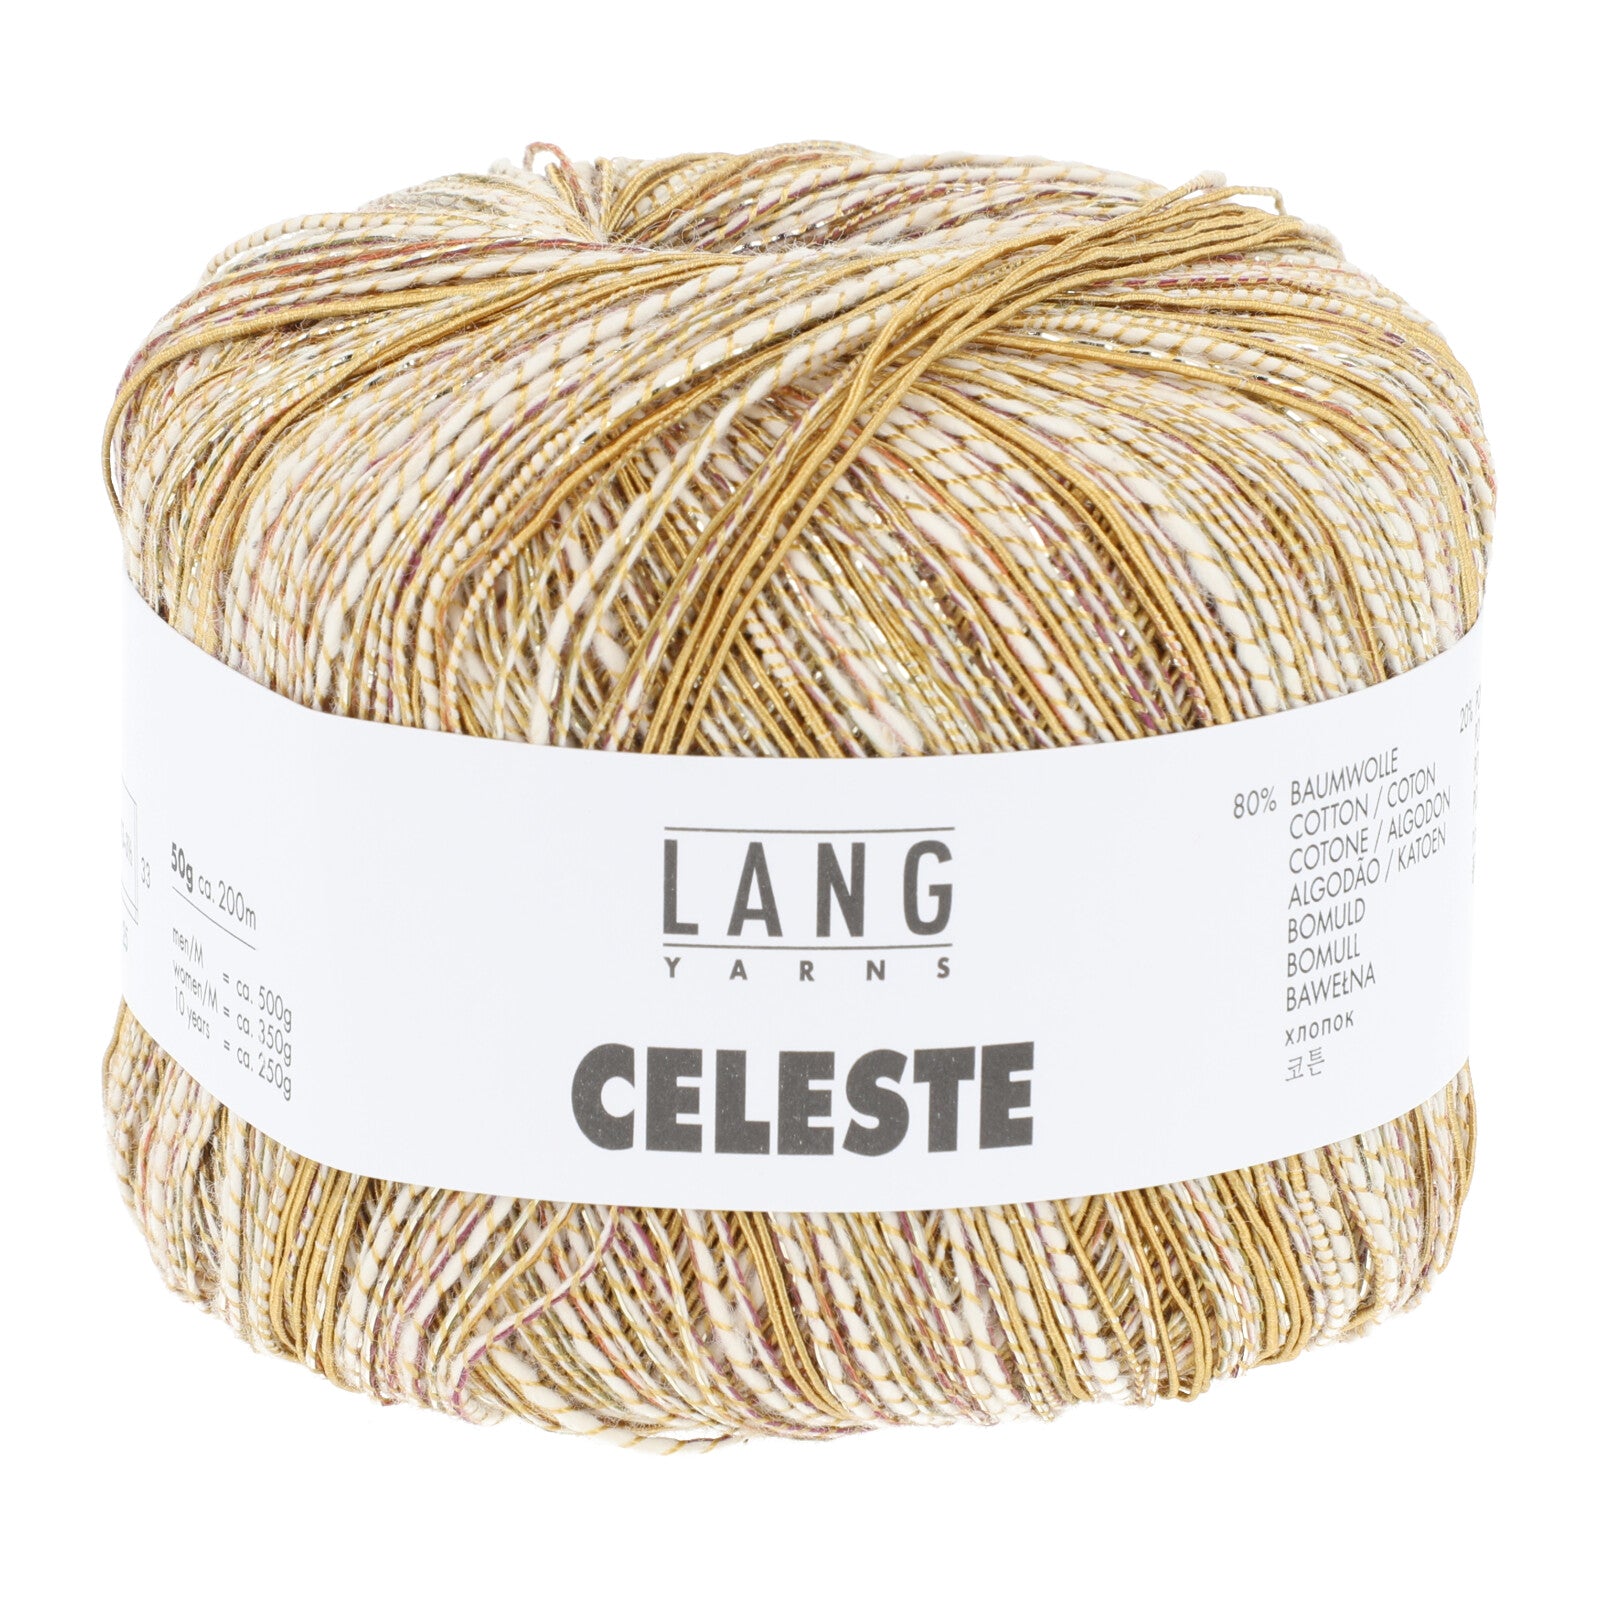 Lang Yarns Celeste yarn color 50